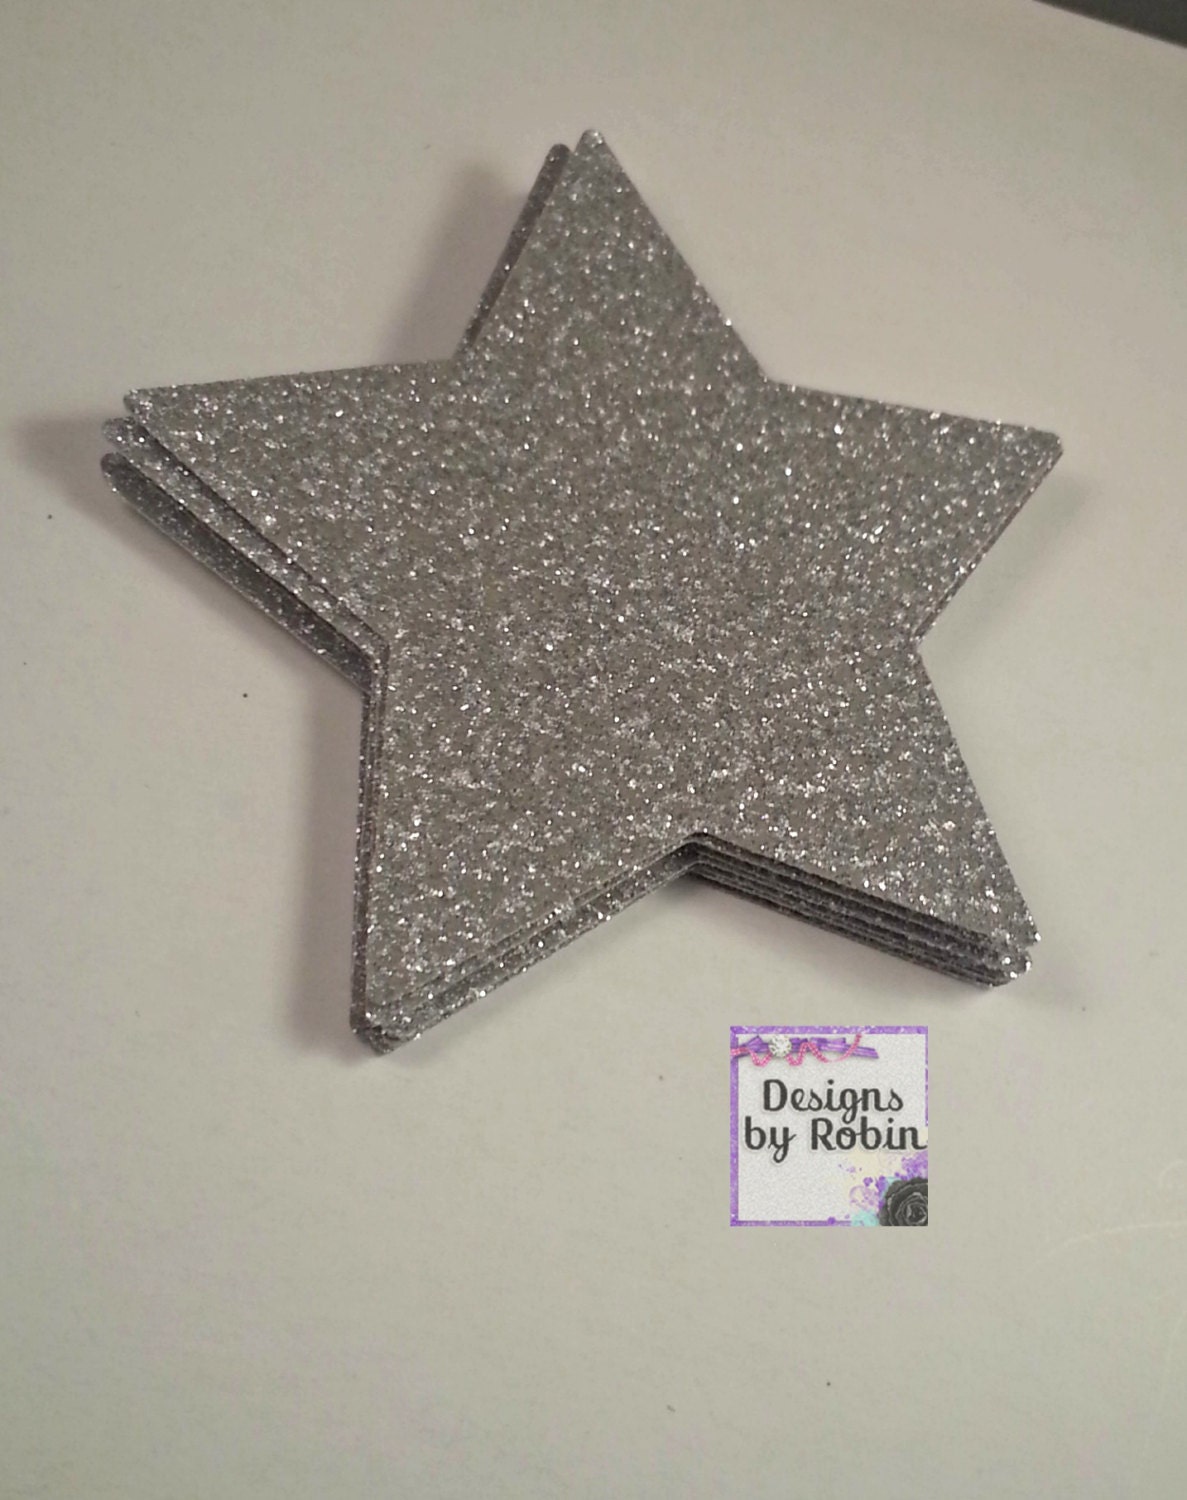 EIMELI 90 Pcs Glitter Star Cutouts, 6 inch Twinkle Star Glitter Paper  Confetti Star Shape Paper Cut Outs(30Pcs Silver，60Pcs Gold ) 